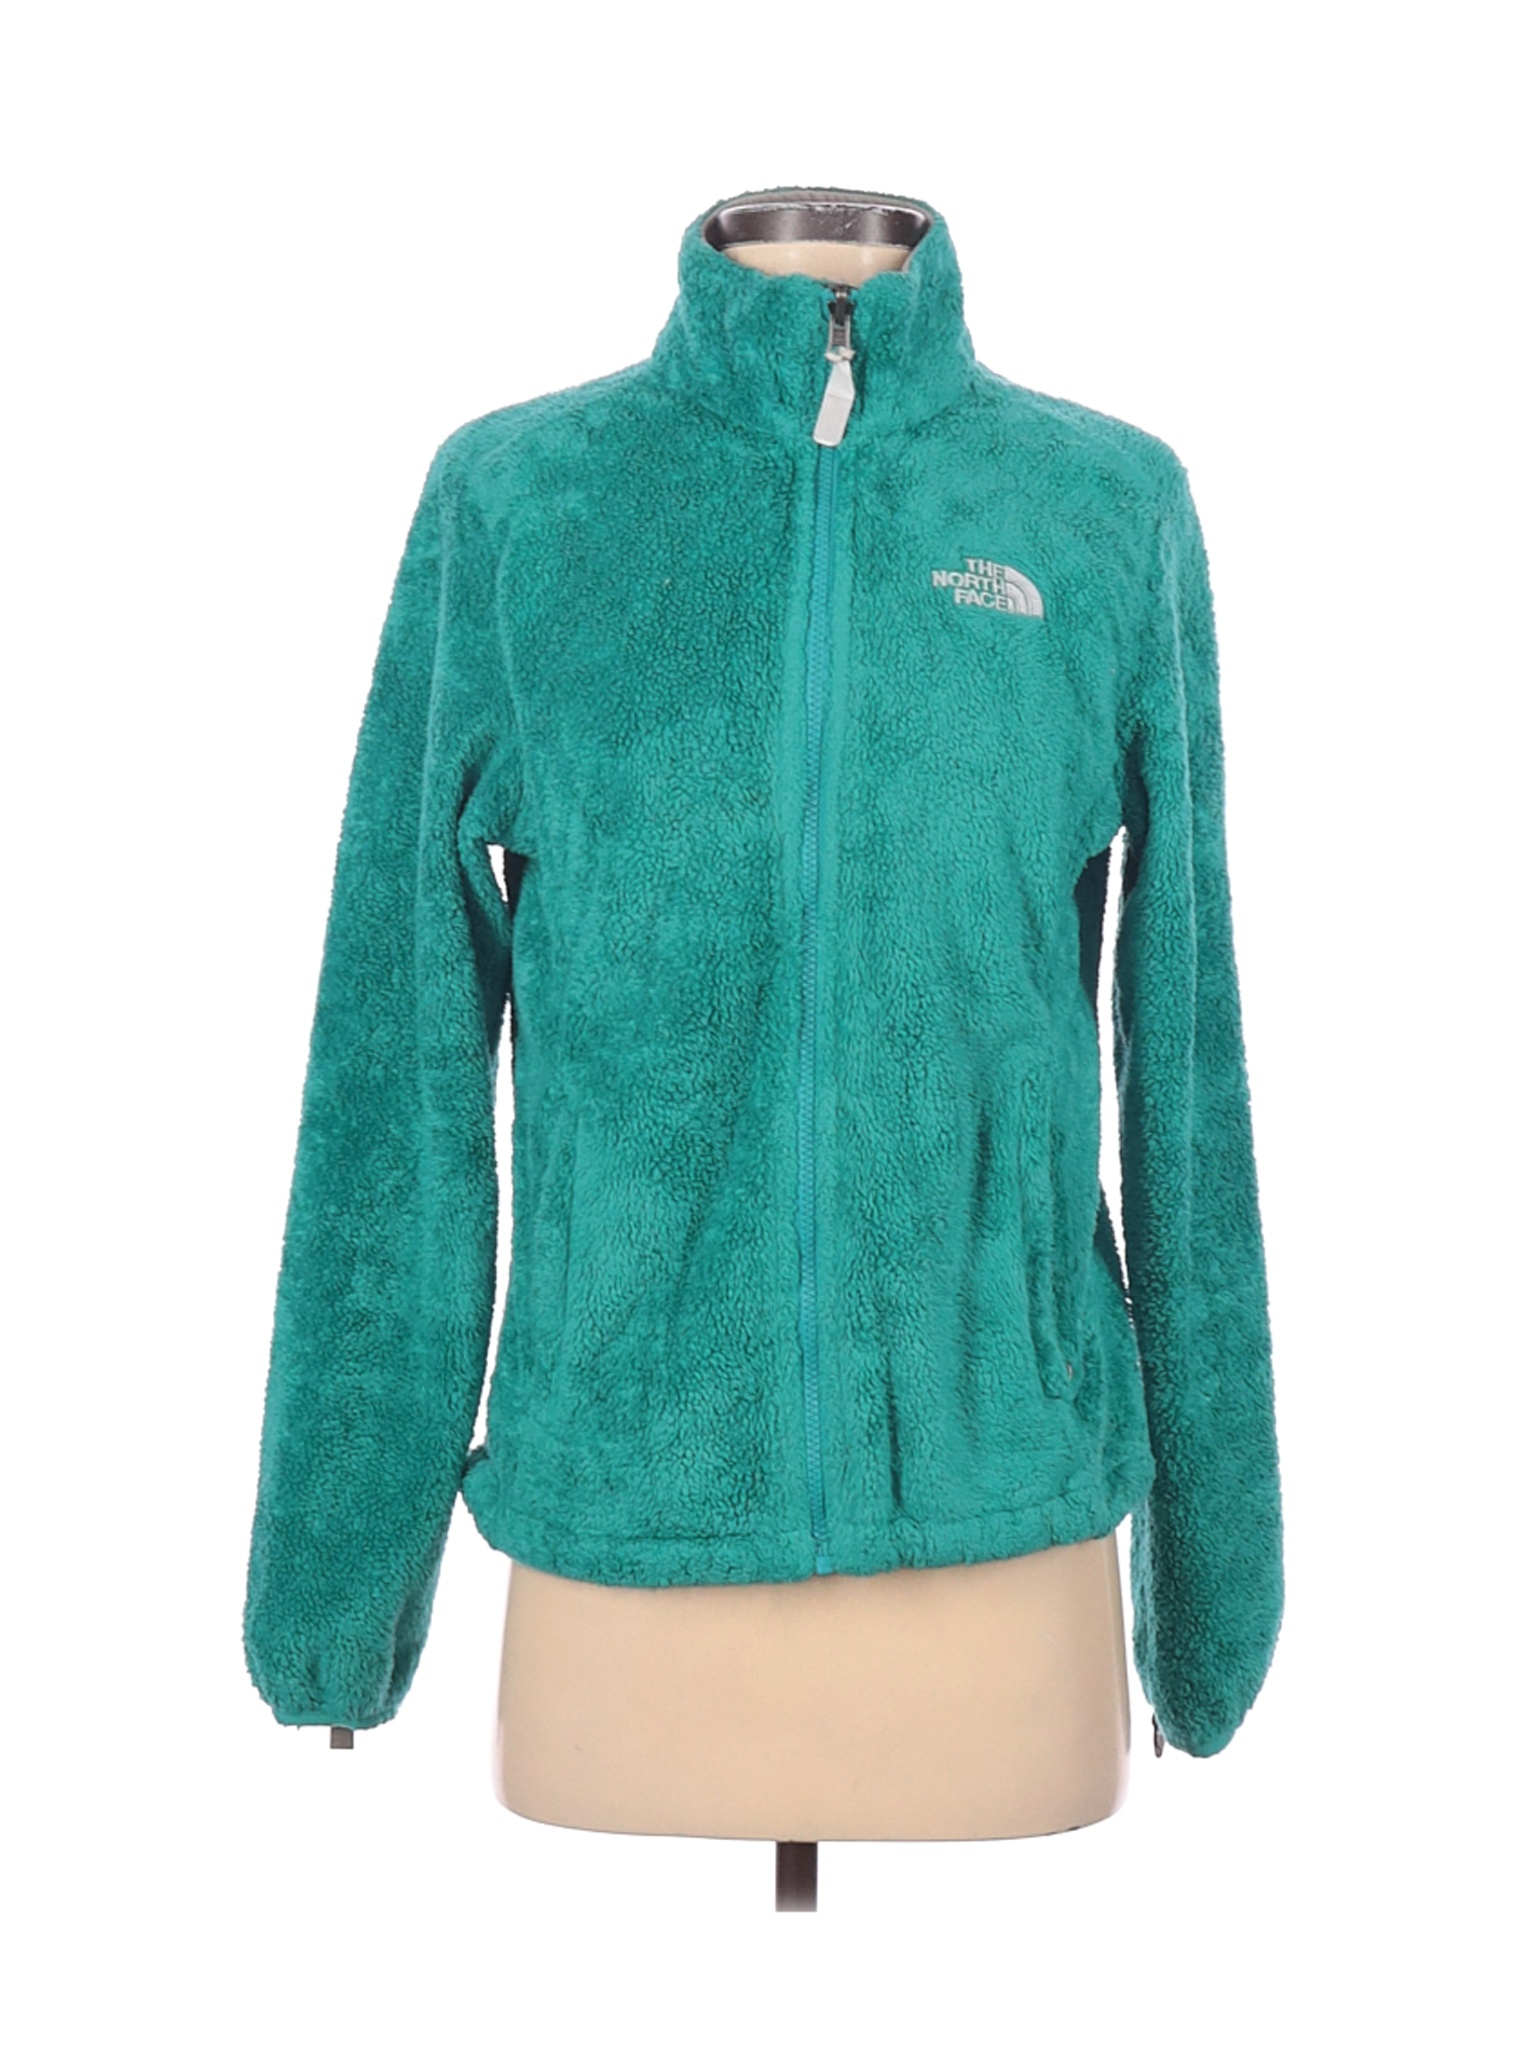 The North Face Women Green Fleece S | eBay